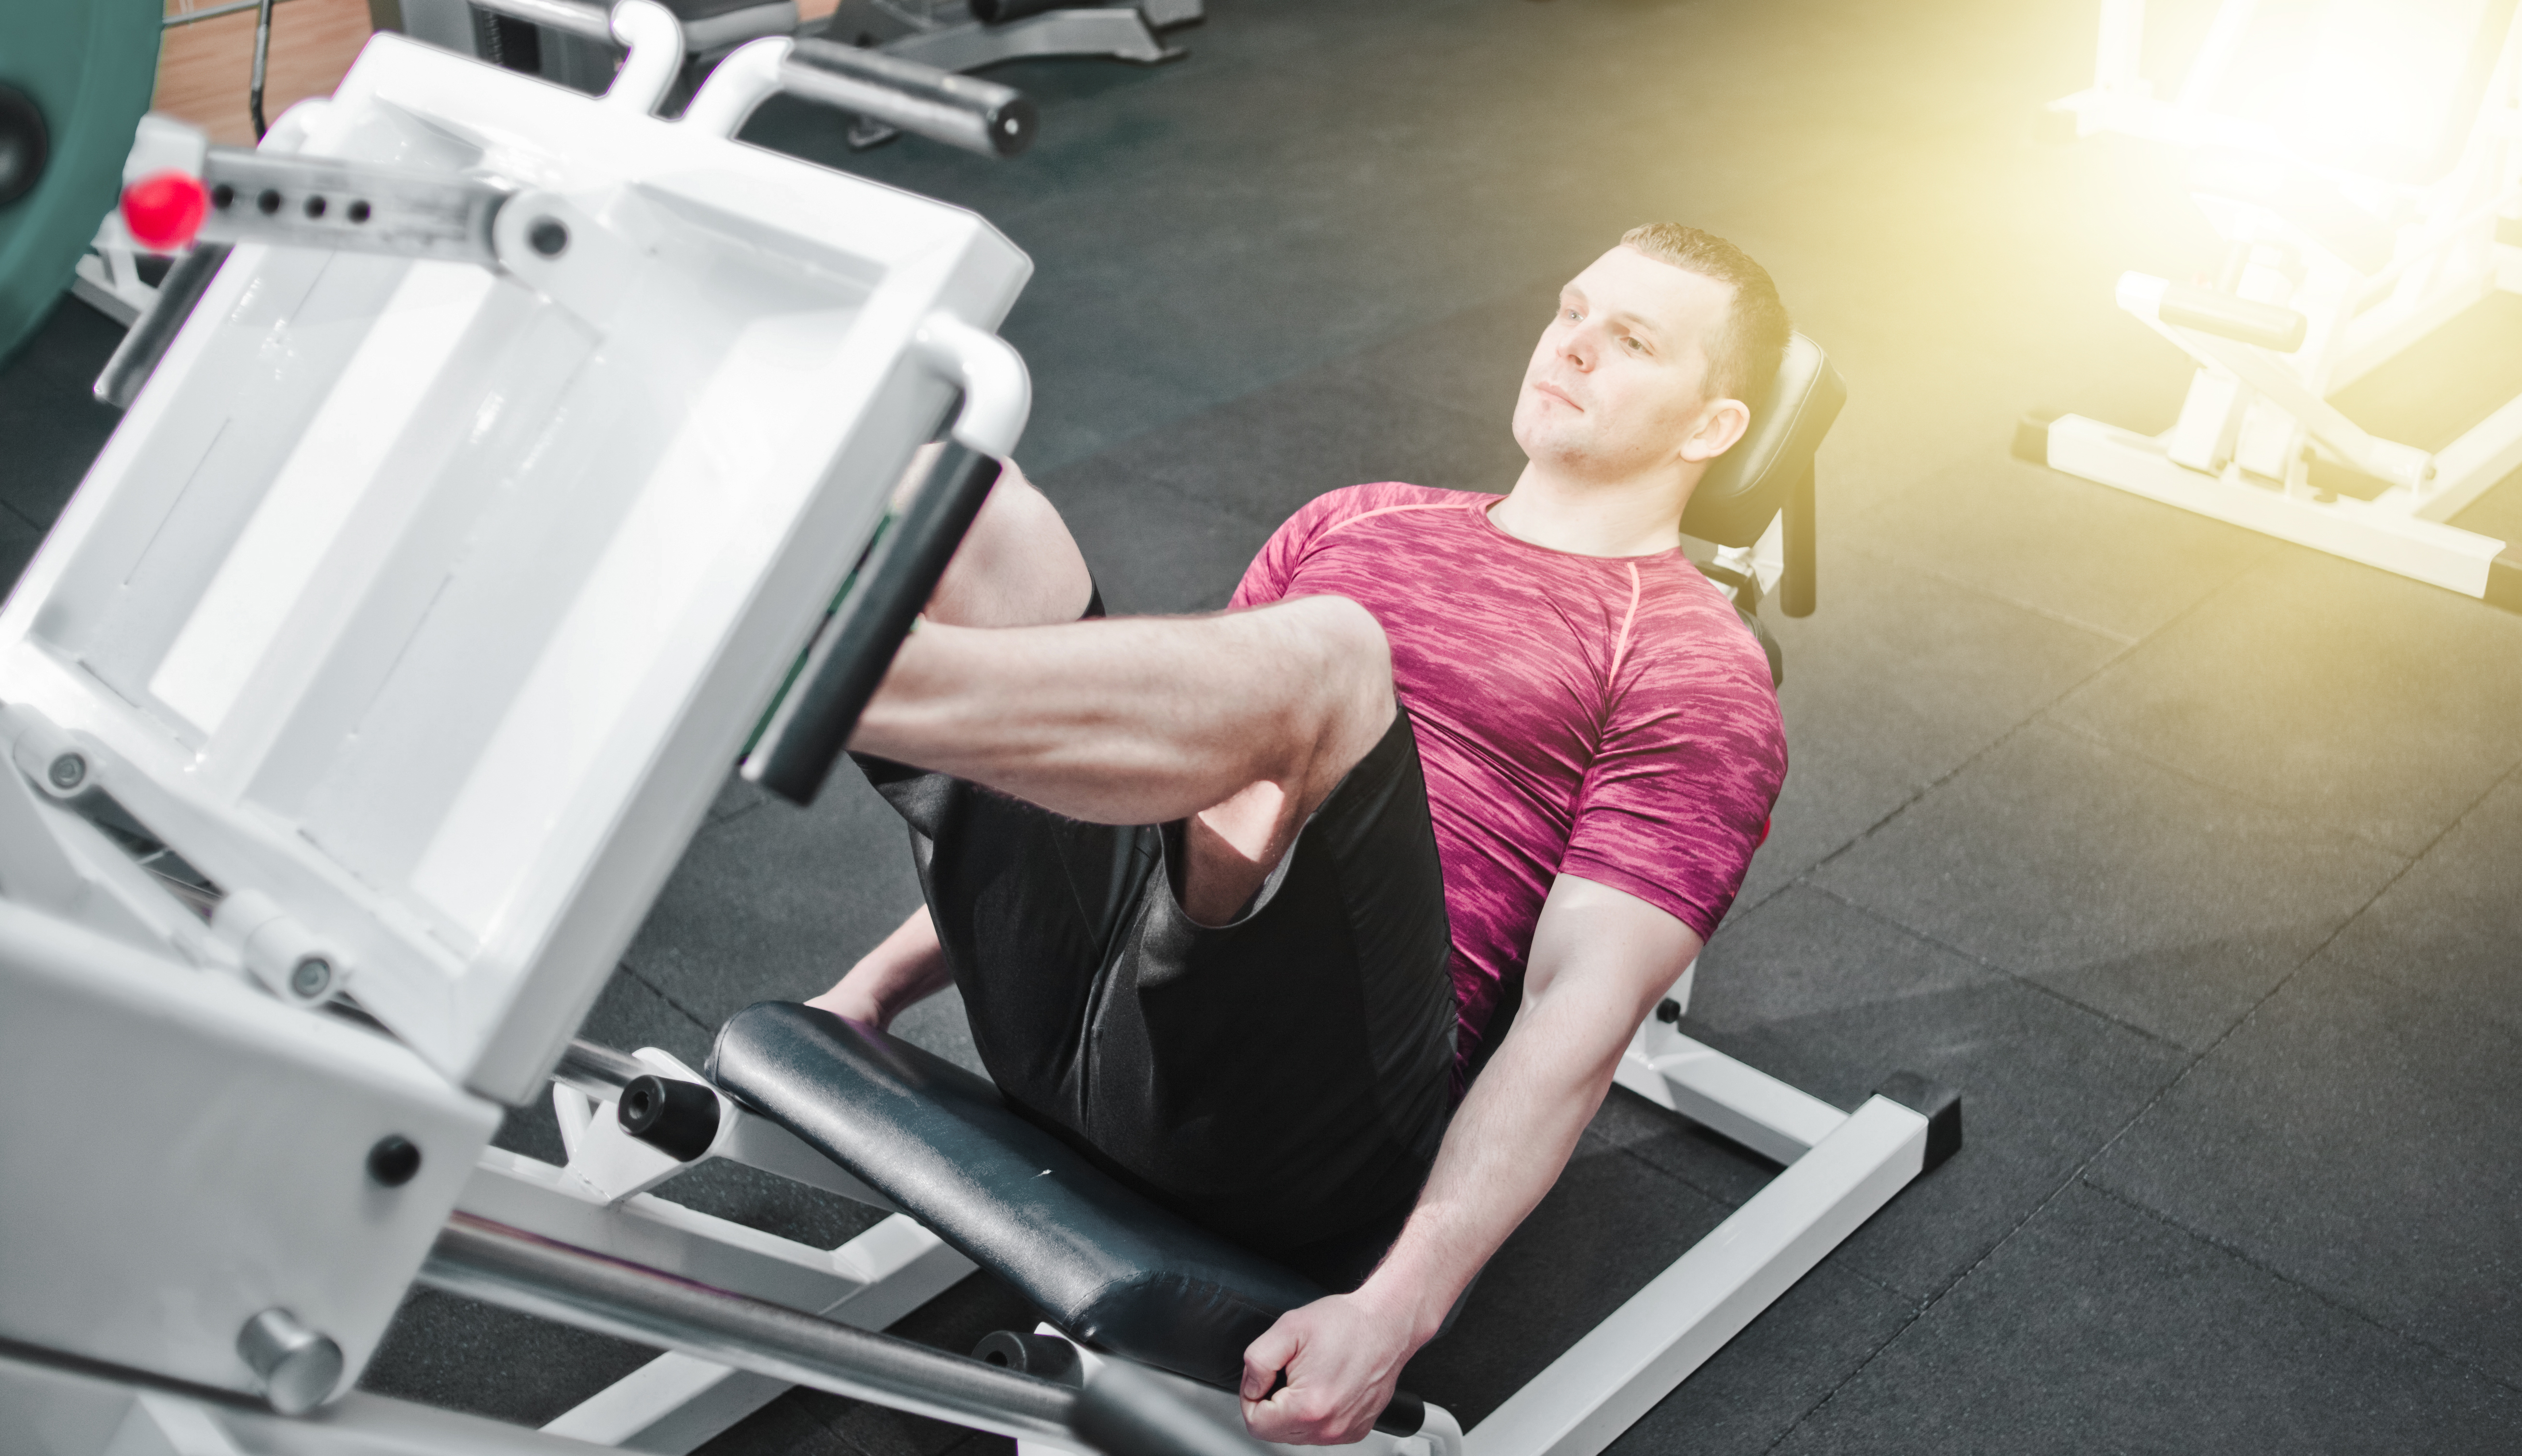 HORIZONTAL SEATED LEG PRESS - Exercises, workouts and routines